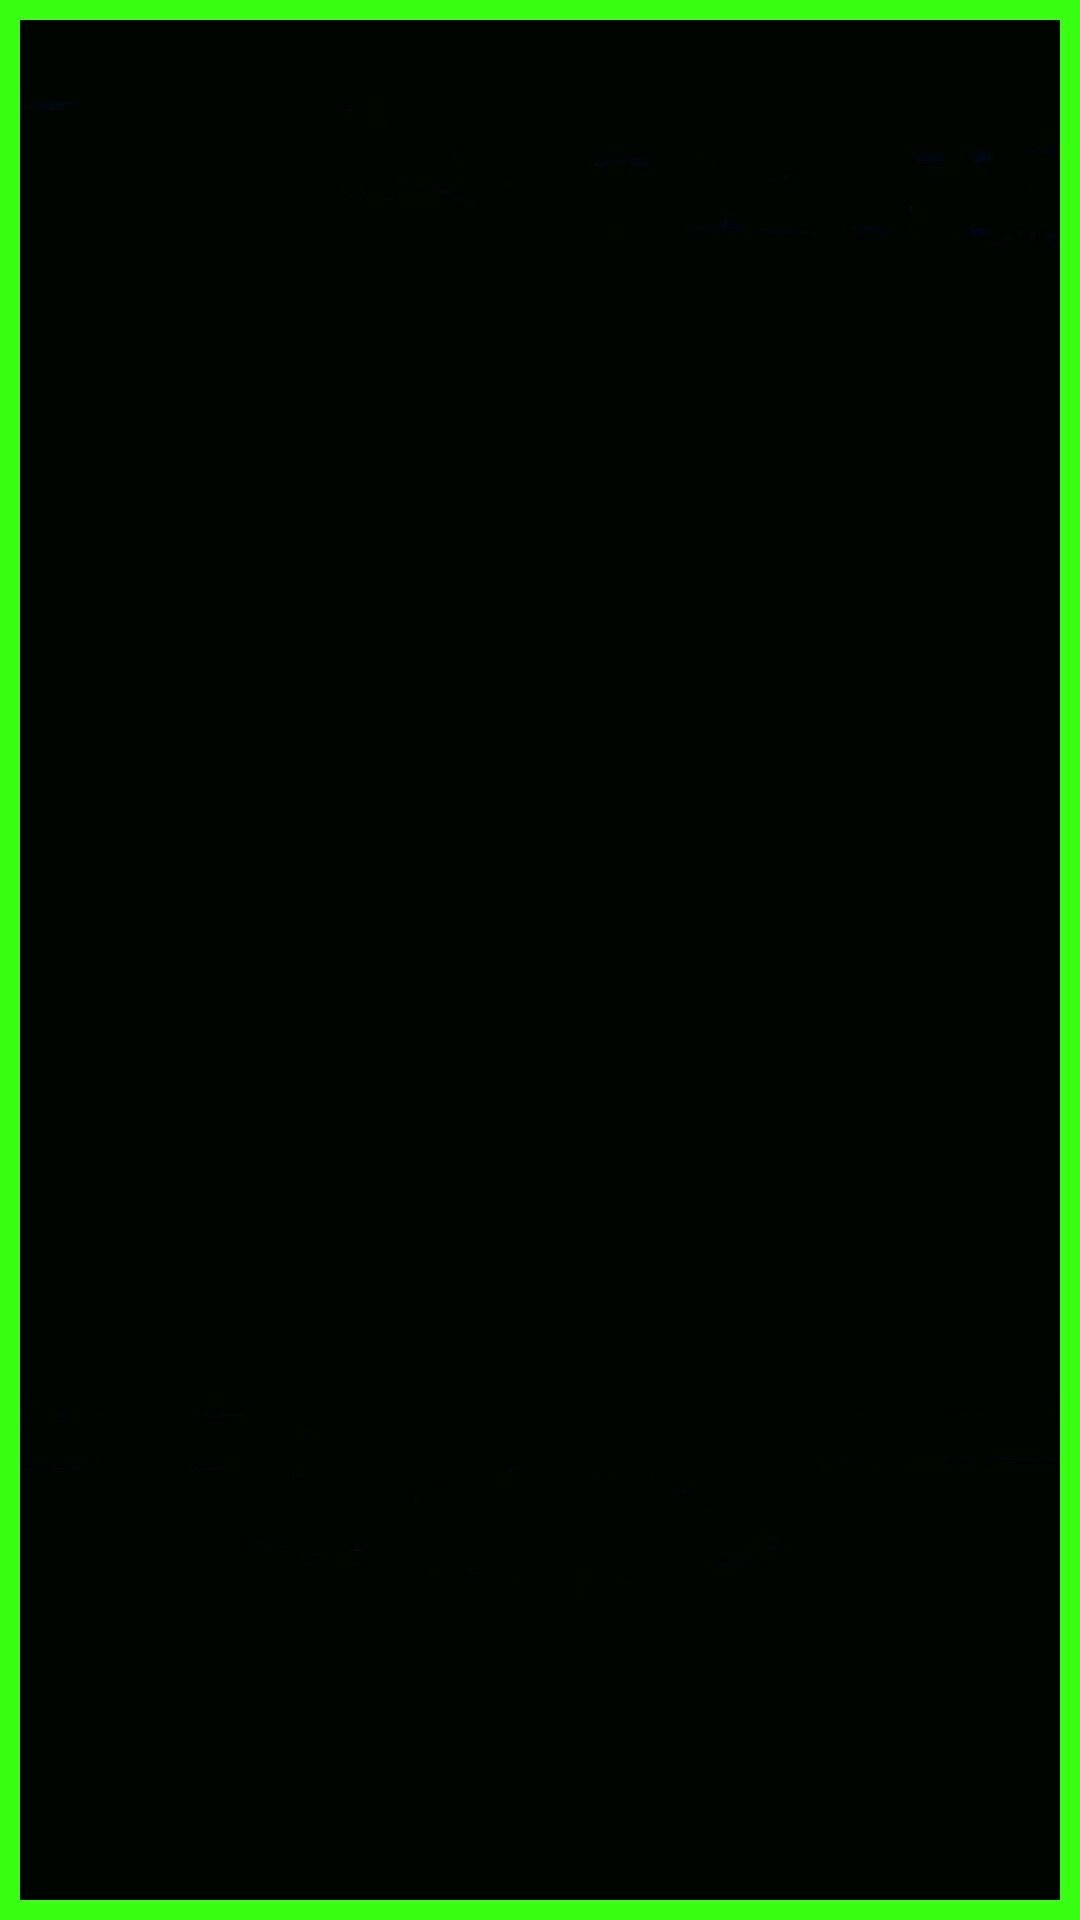 1080x1920 Neon Green Border Wallpaper